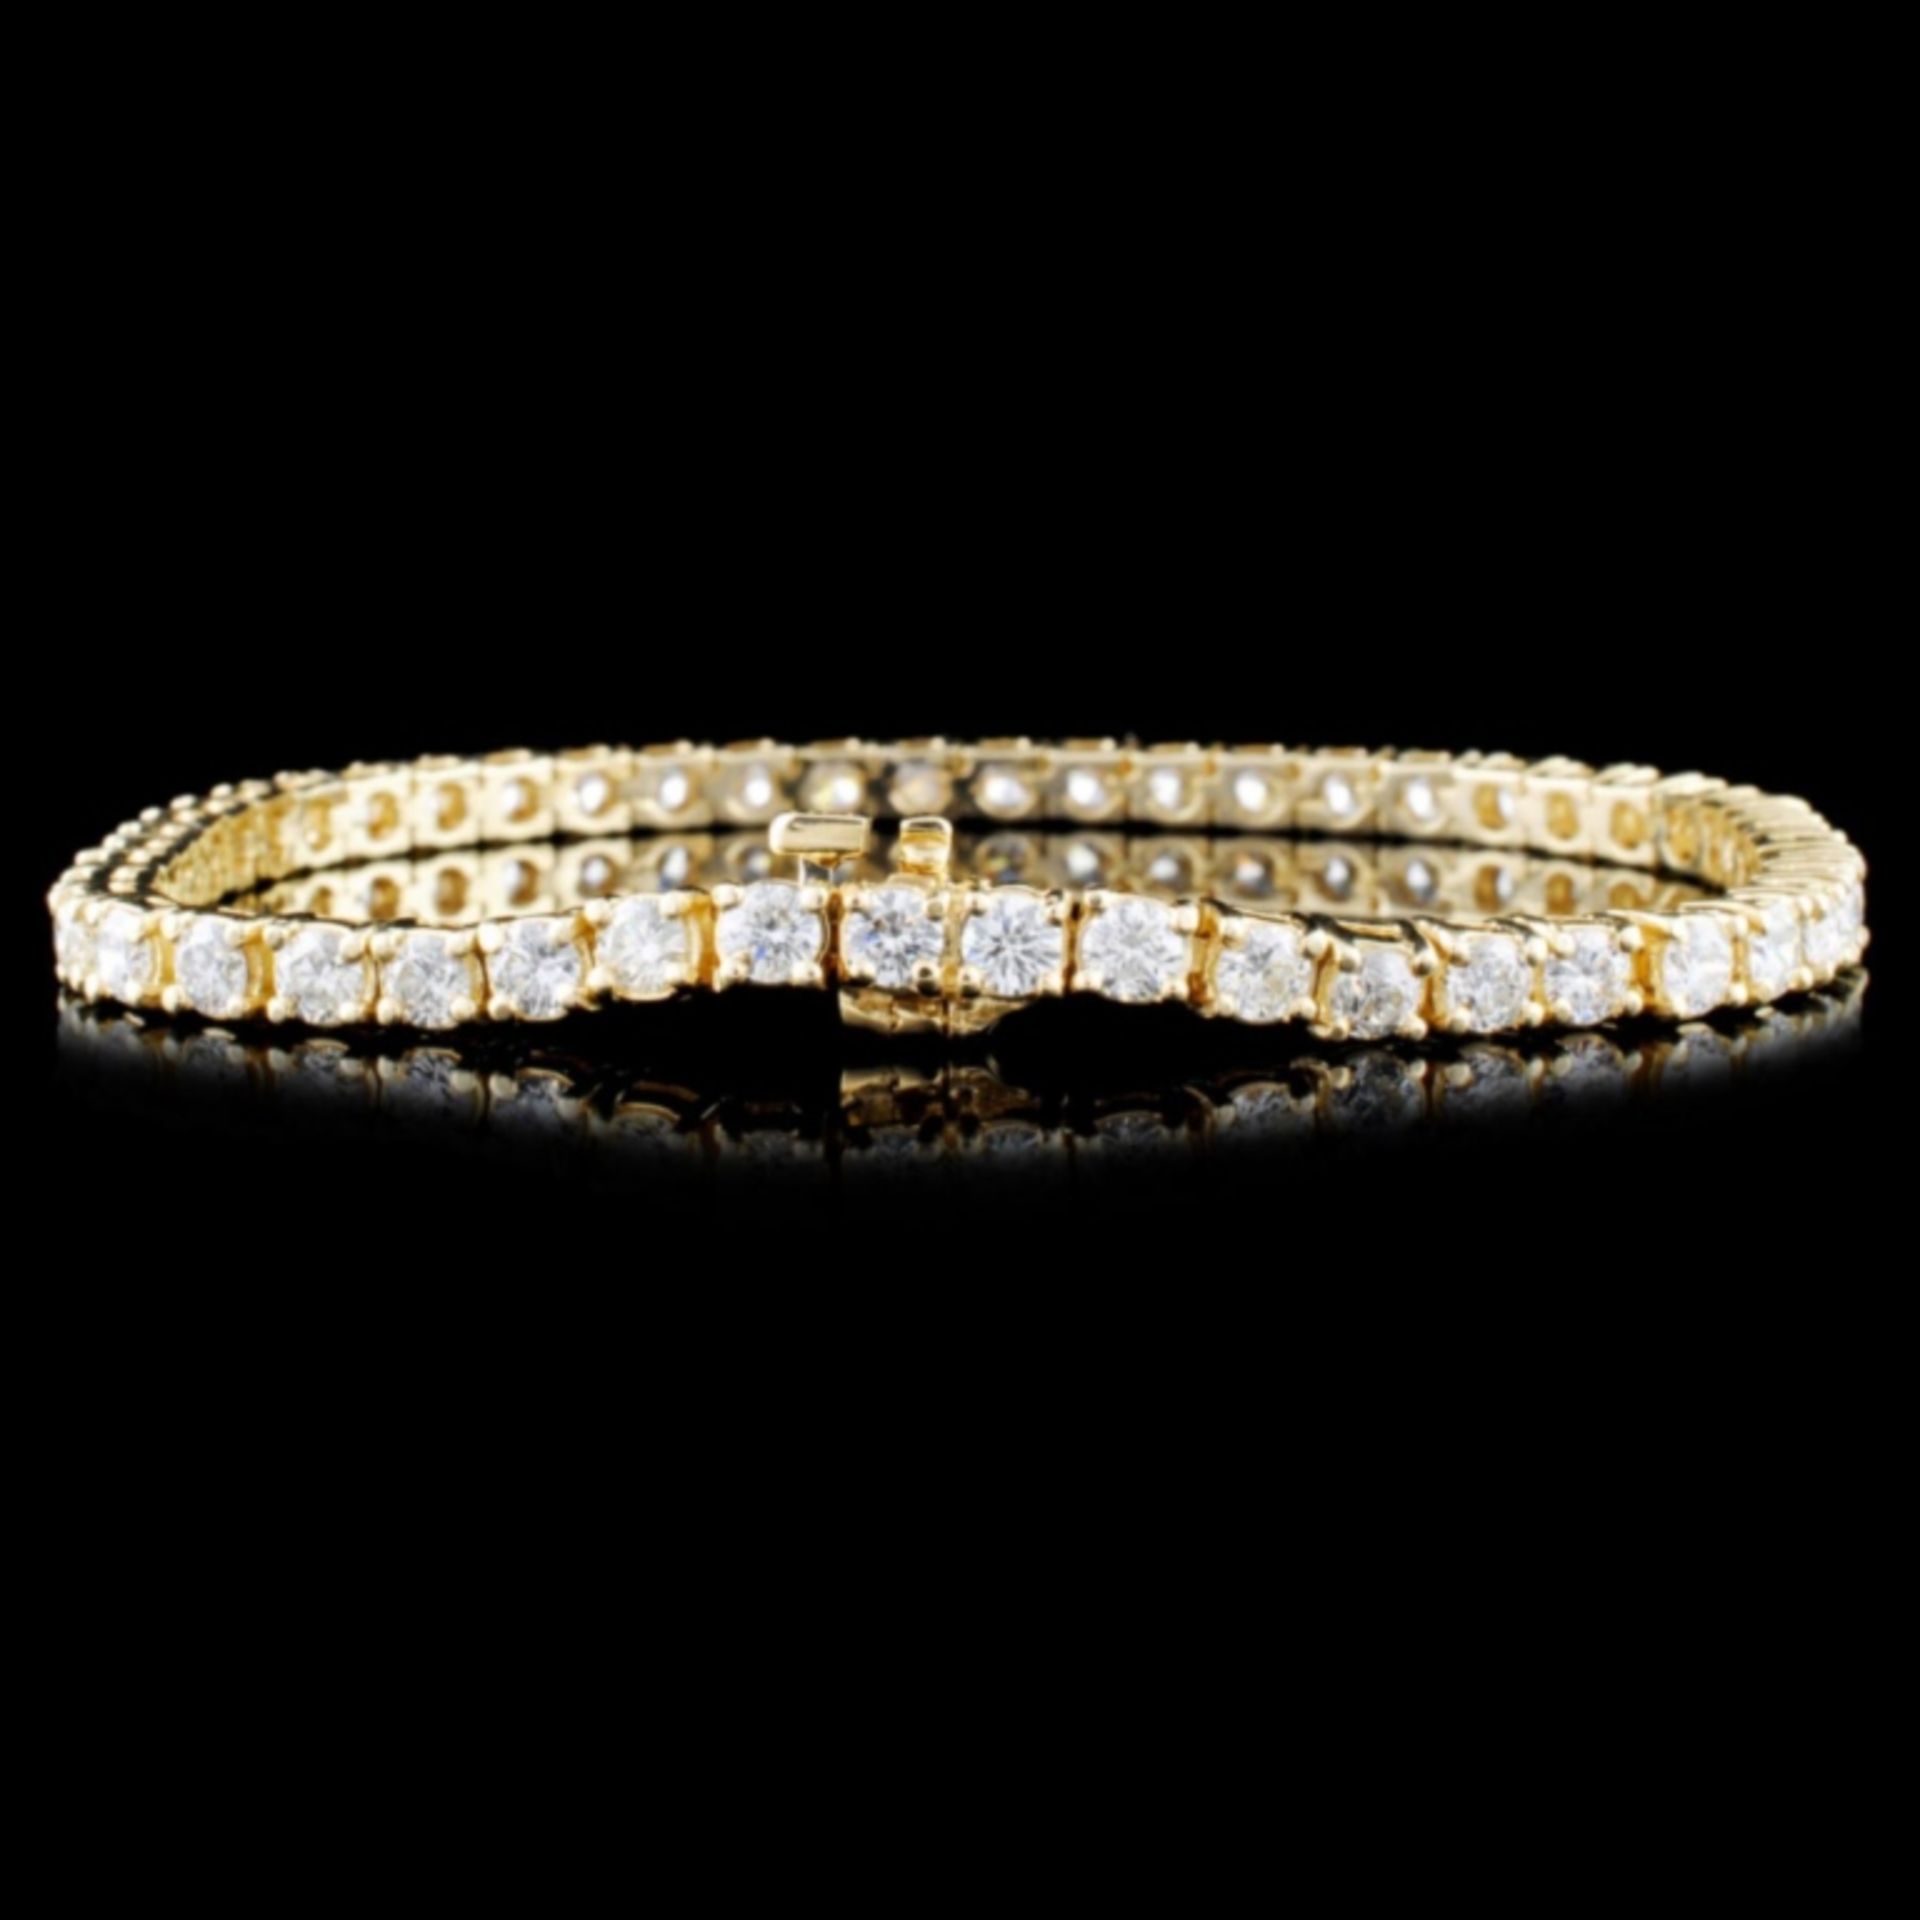 14K Gold 5.16ctw Diamond Bracelet - Image 2 of 3